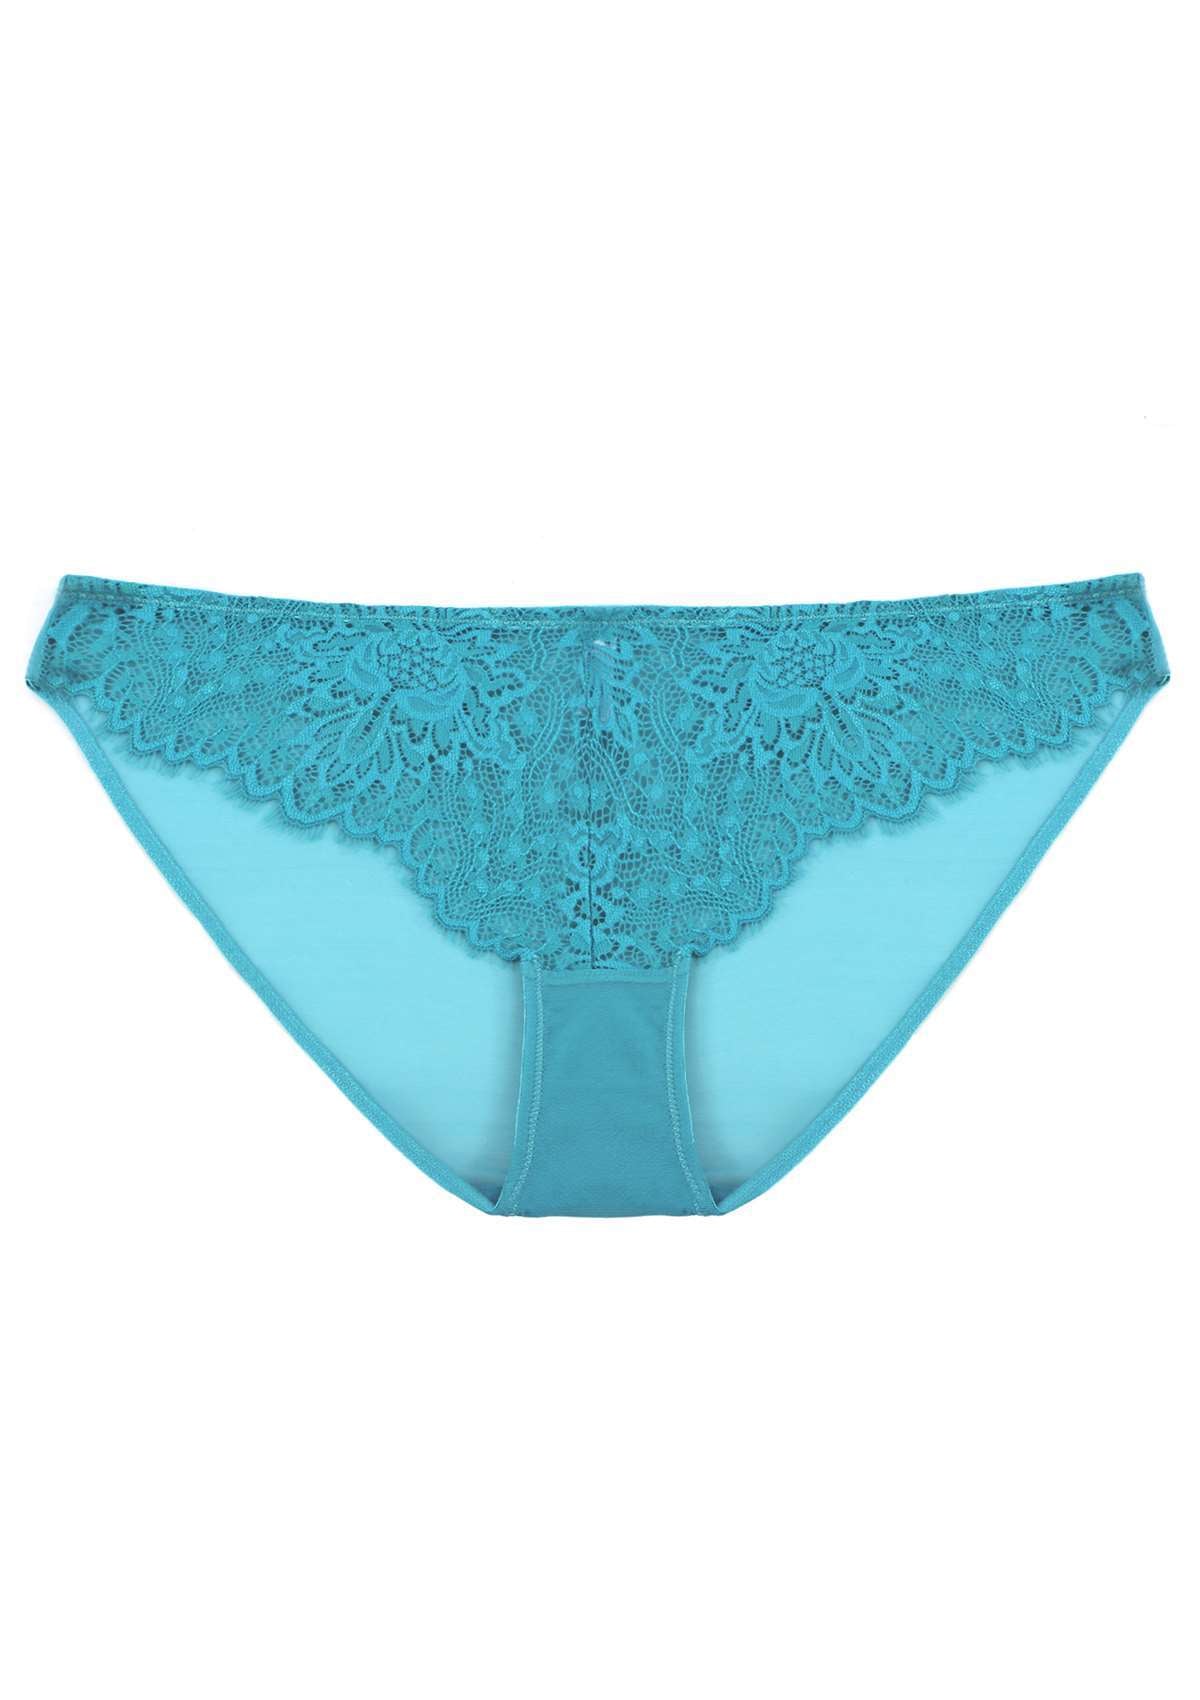 HSIA Sunflower Exquisite Horizon Blue Lace Bikini Underwear - XL / High-Rise Brief / Horizon Blue